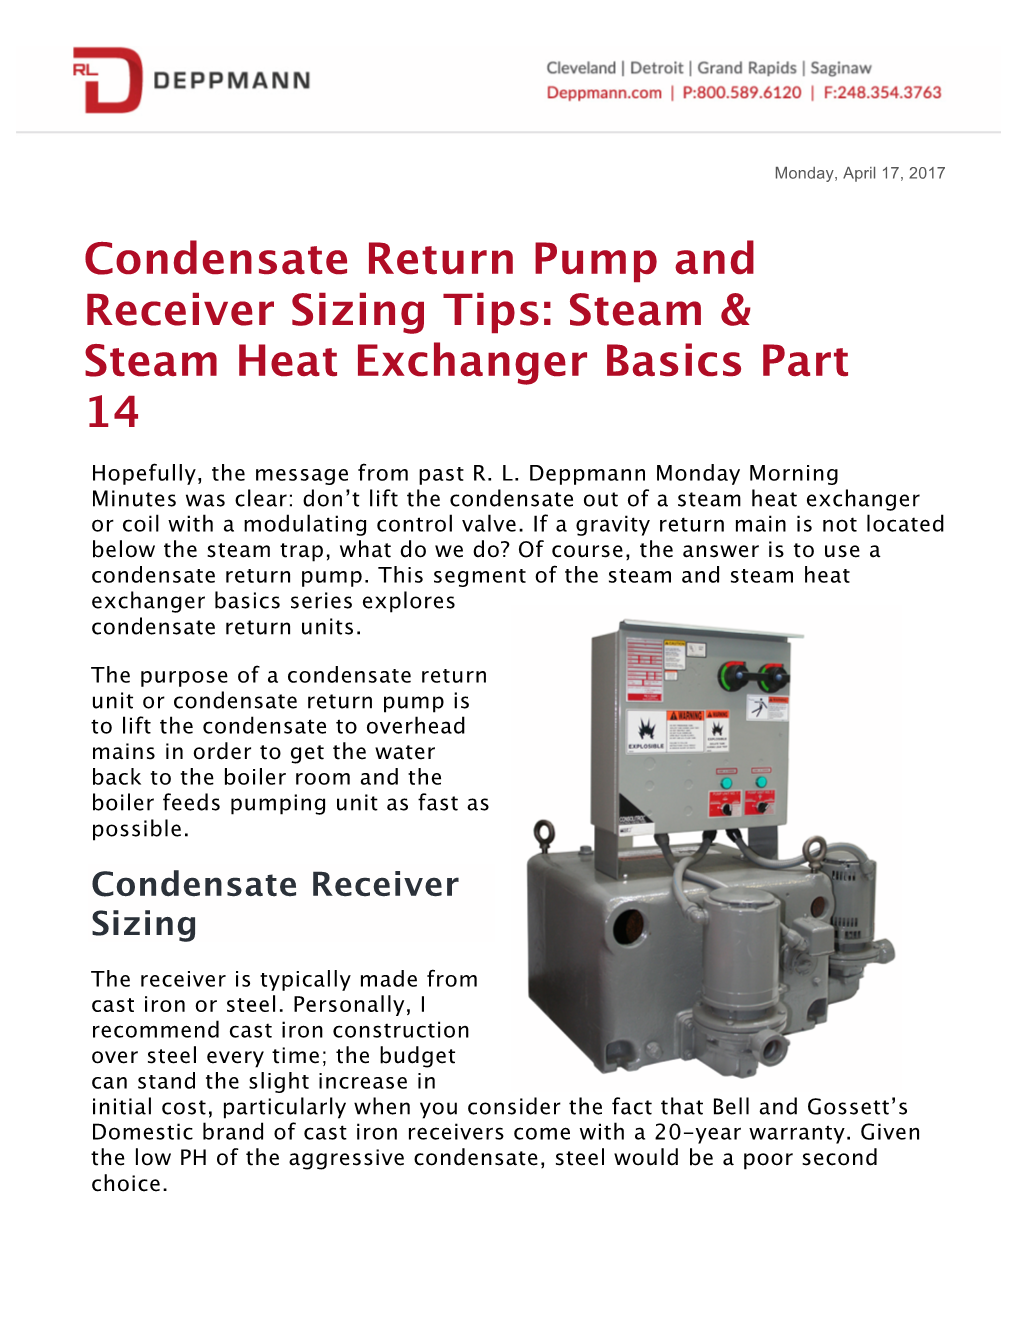 Condensate Return Pump and Receiver Sizing Tips: Steam & Steam Heat Exchanger Basics Part 14